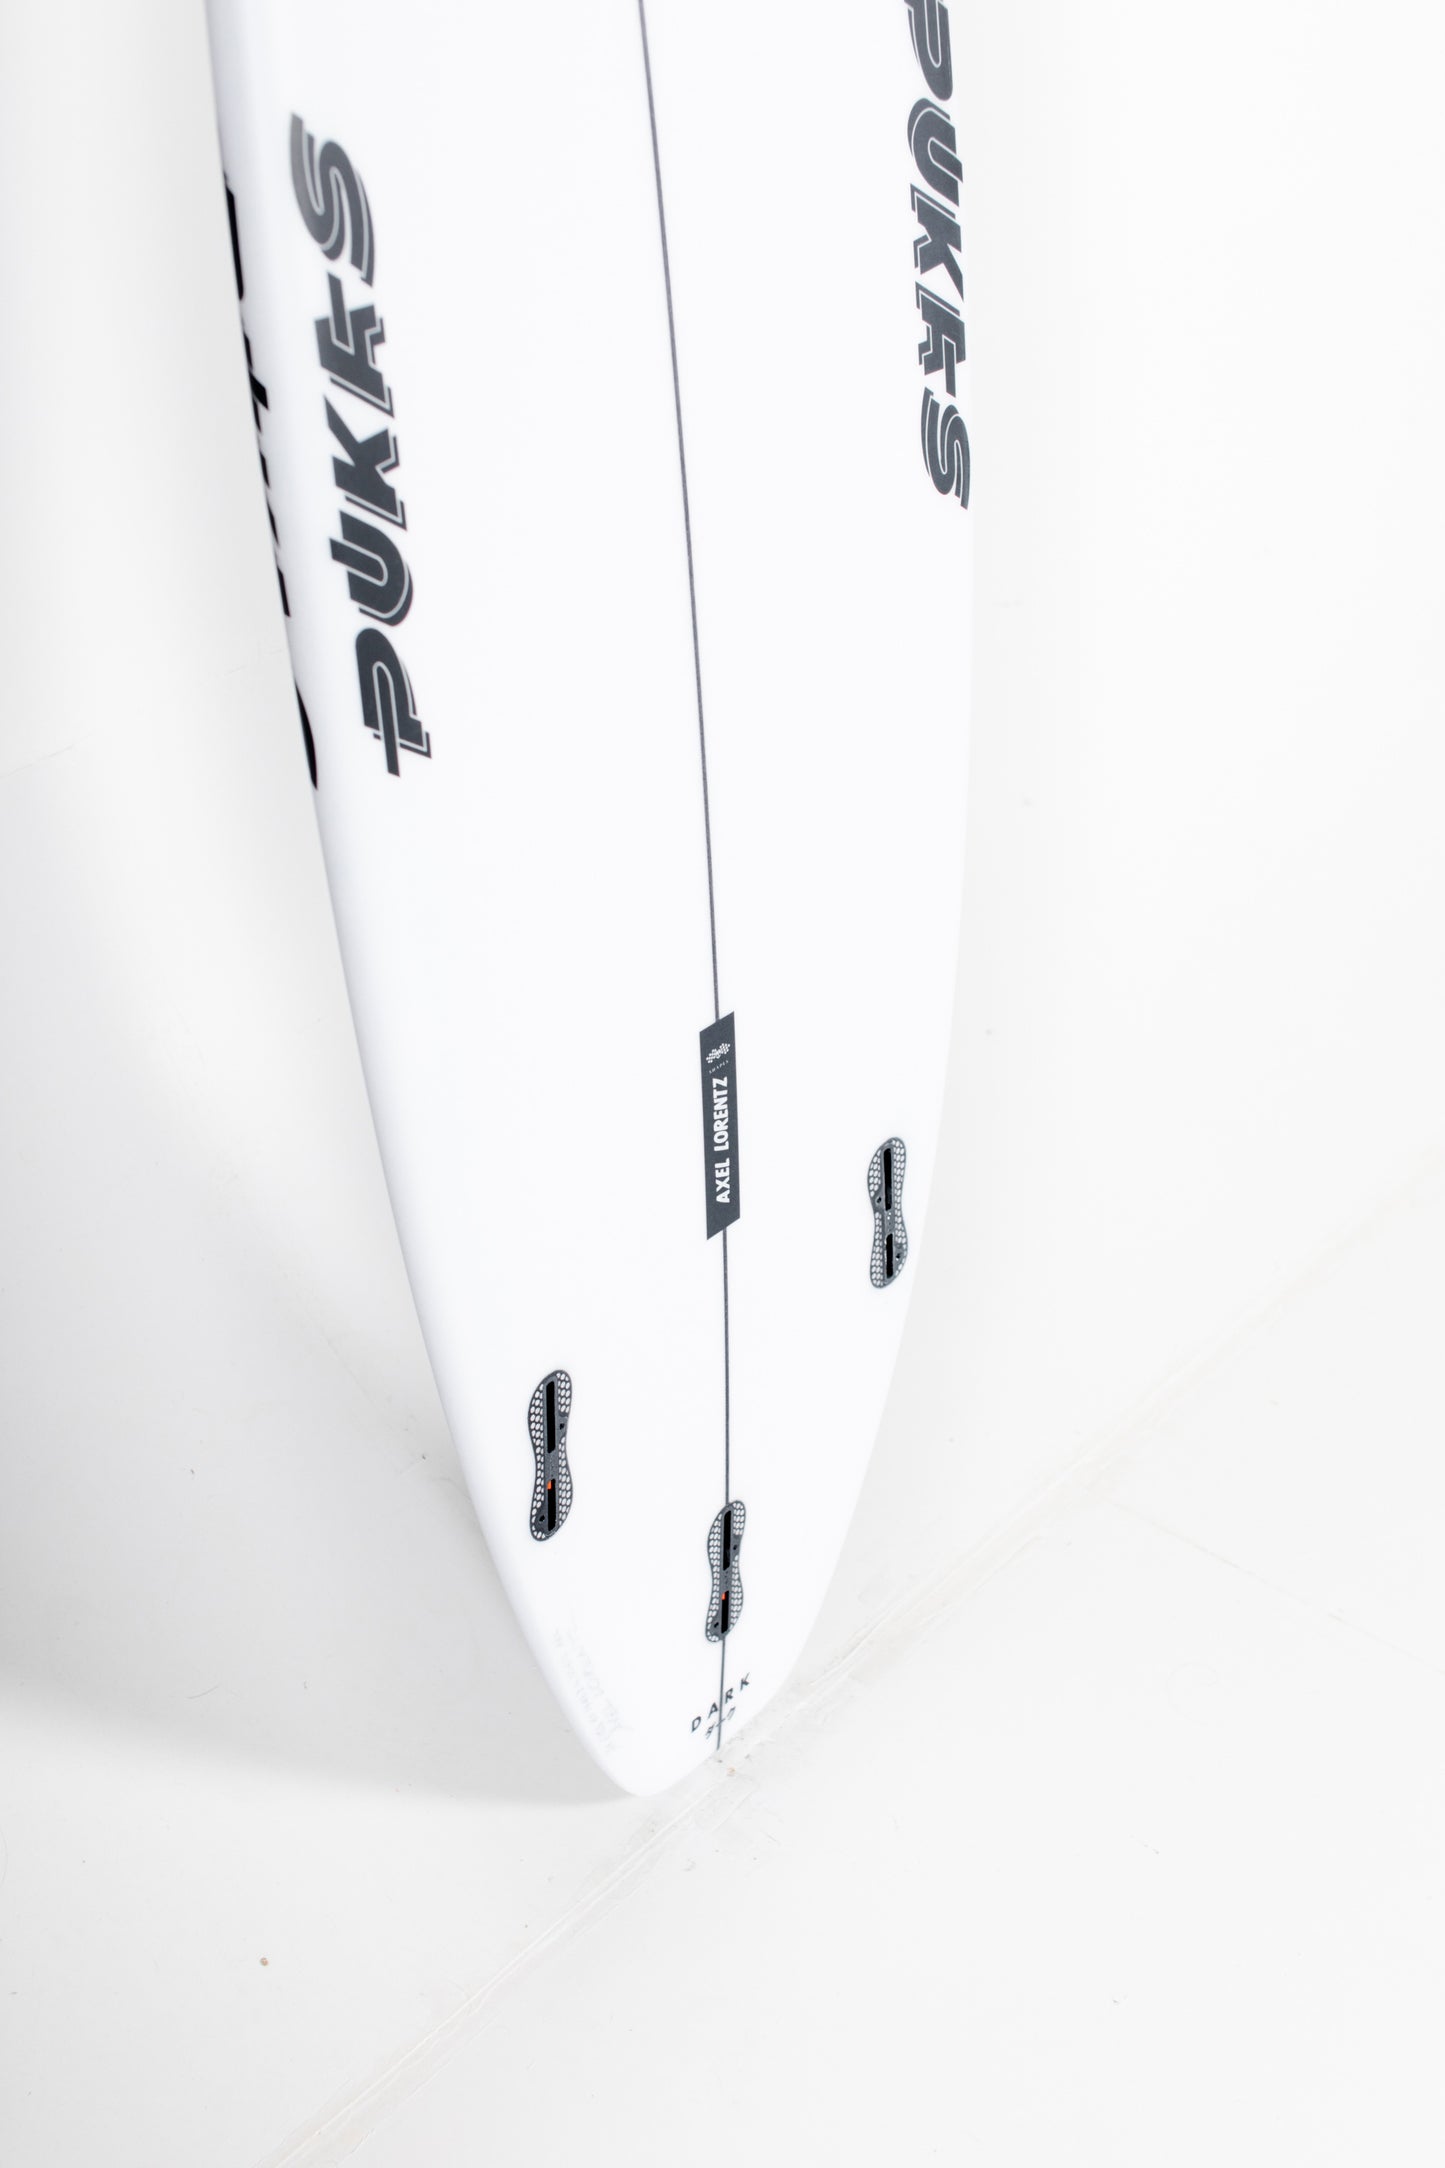 
                  
                    Pukas Surf Shop - Pukas Surfboard - DARK by Axel Lorentz - 6’1” x 19,63 x 2,4 - 30,67L - AX06153
                  
                